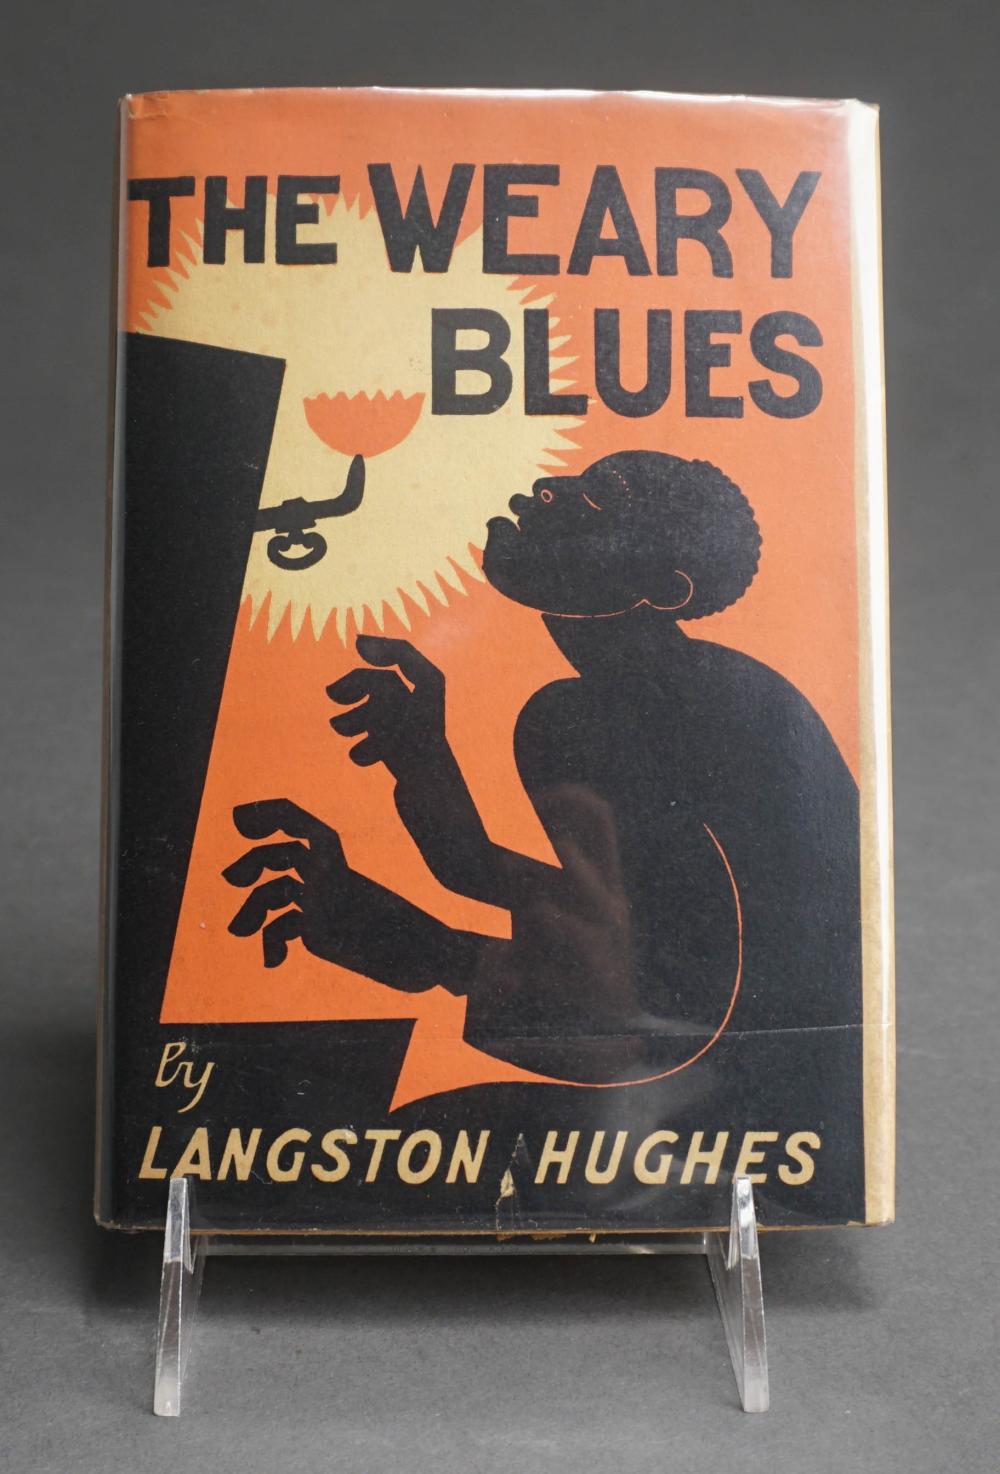  THE WEARY BLUES LANGSTON HUGHES 2e5888